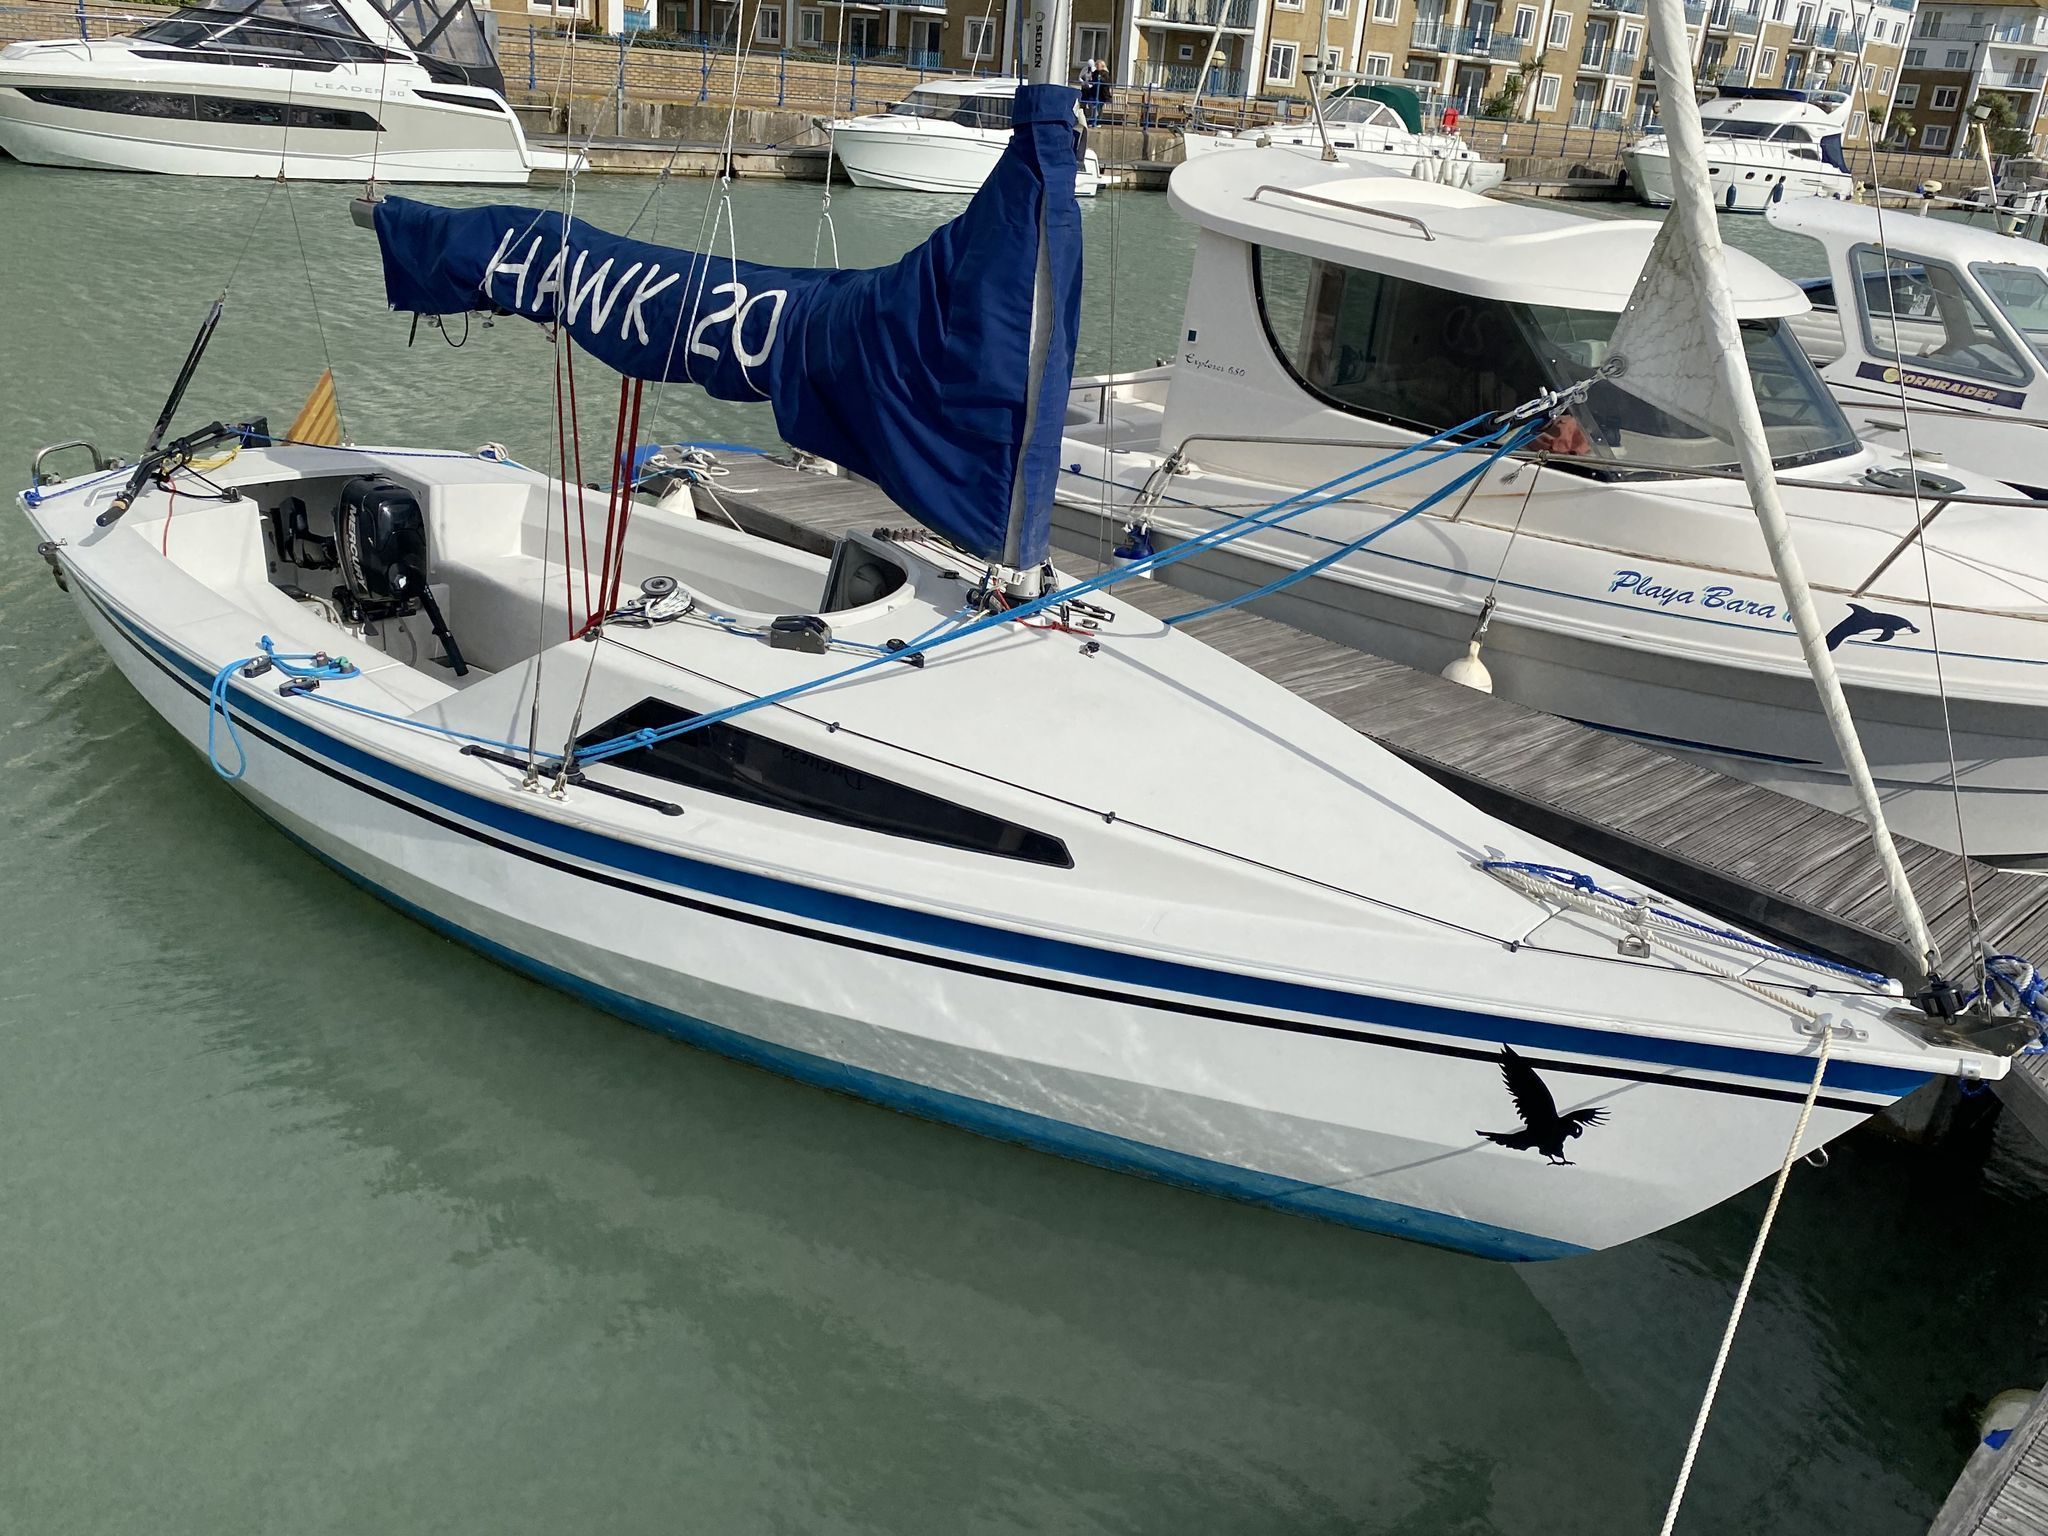 hawk 20 yacht for sale